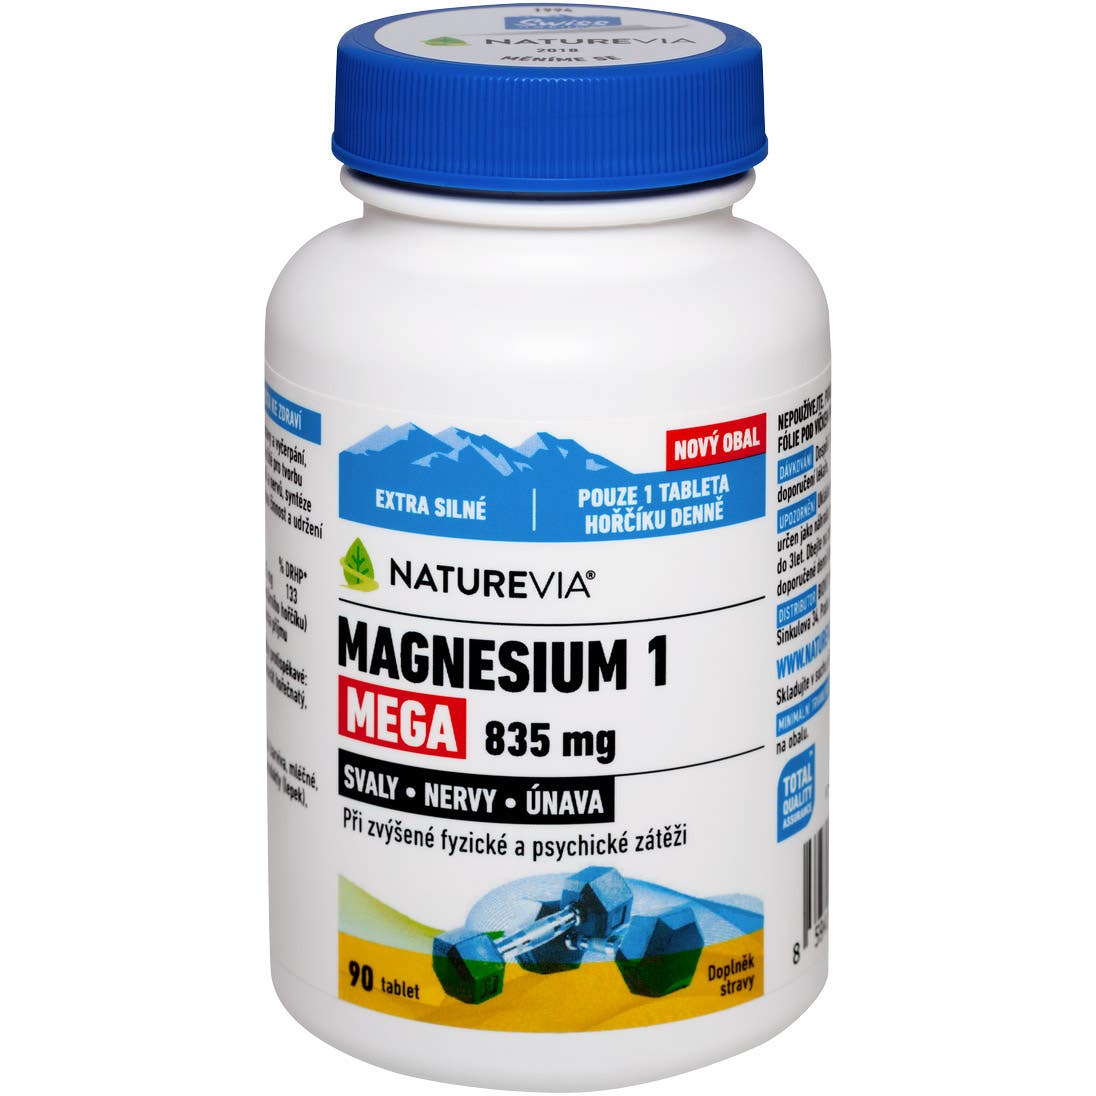 Swiss NatureVia Magnesium 1 Mega 835mg 90 tablet